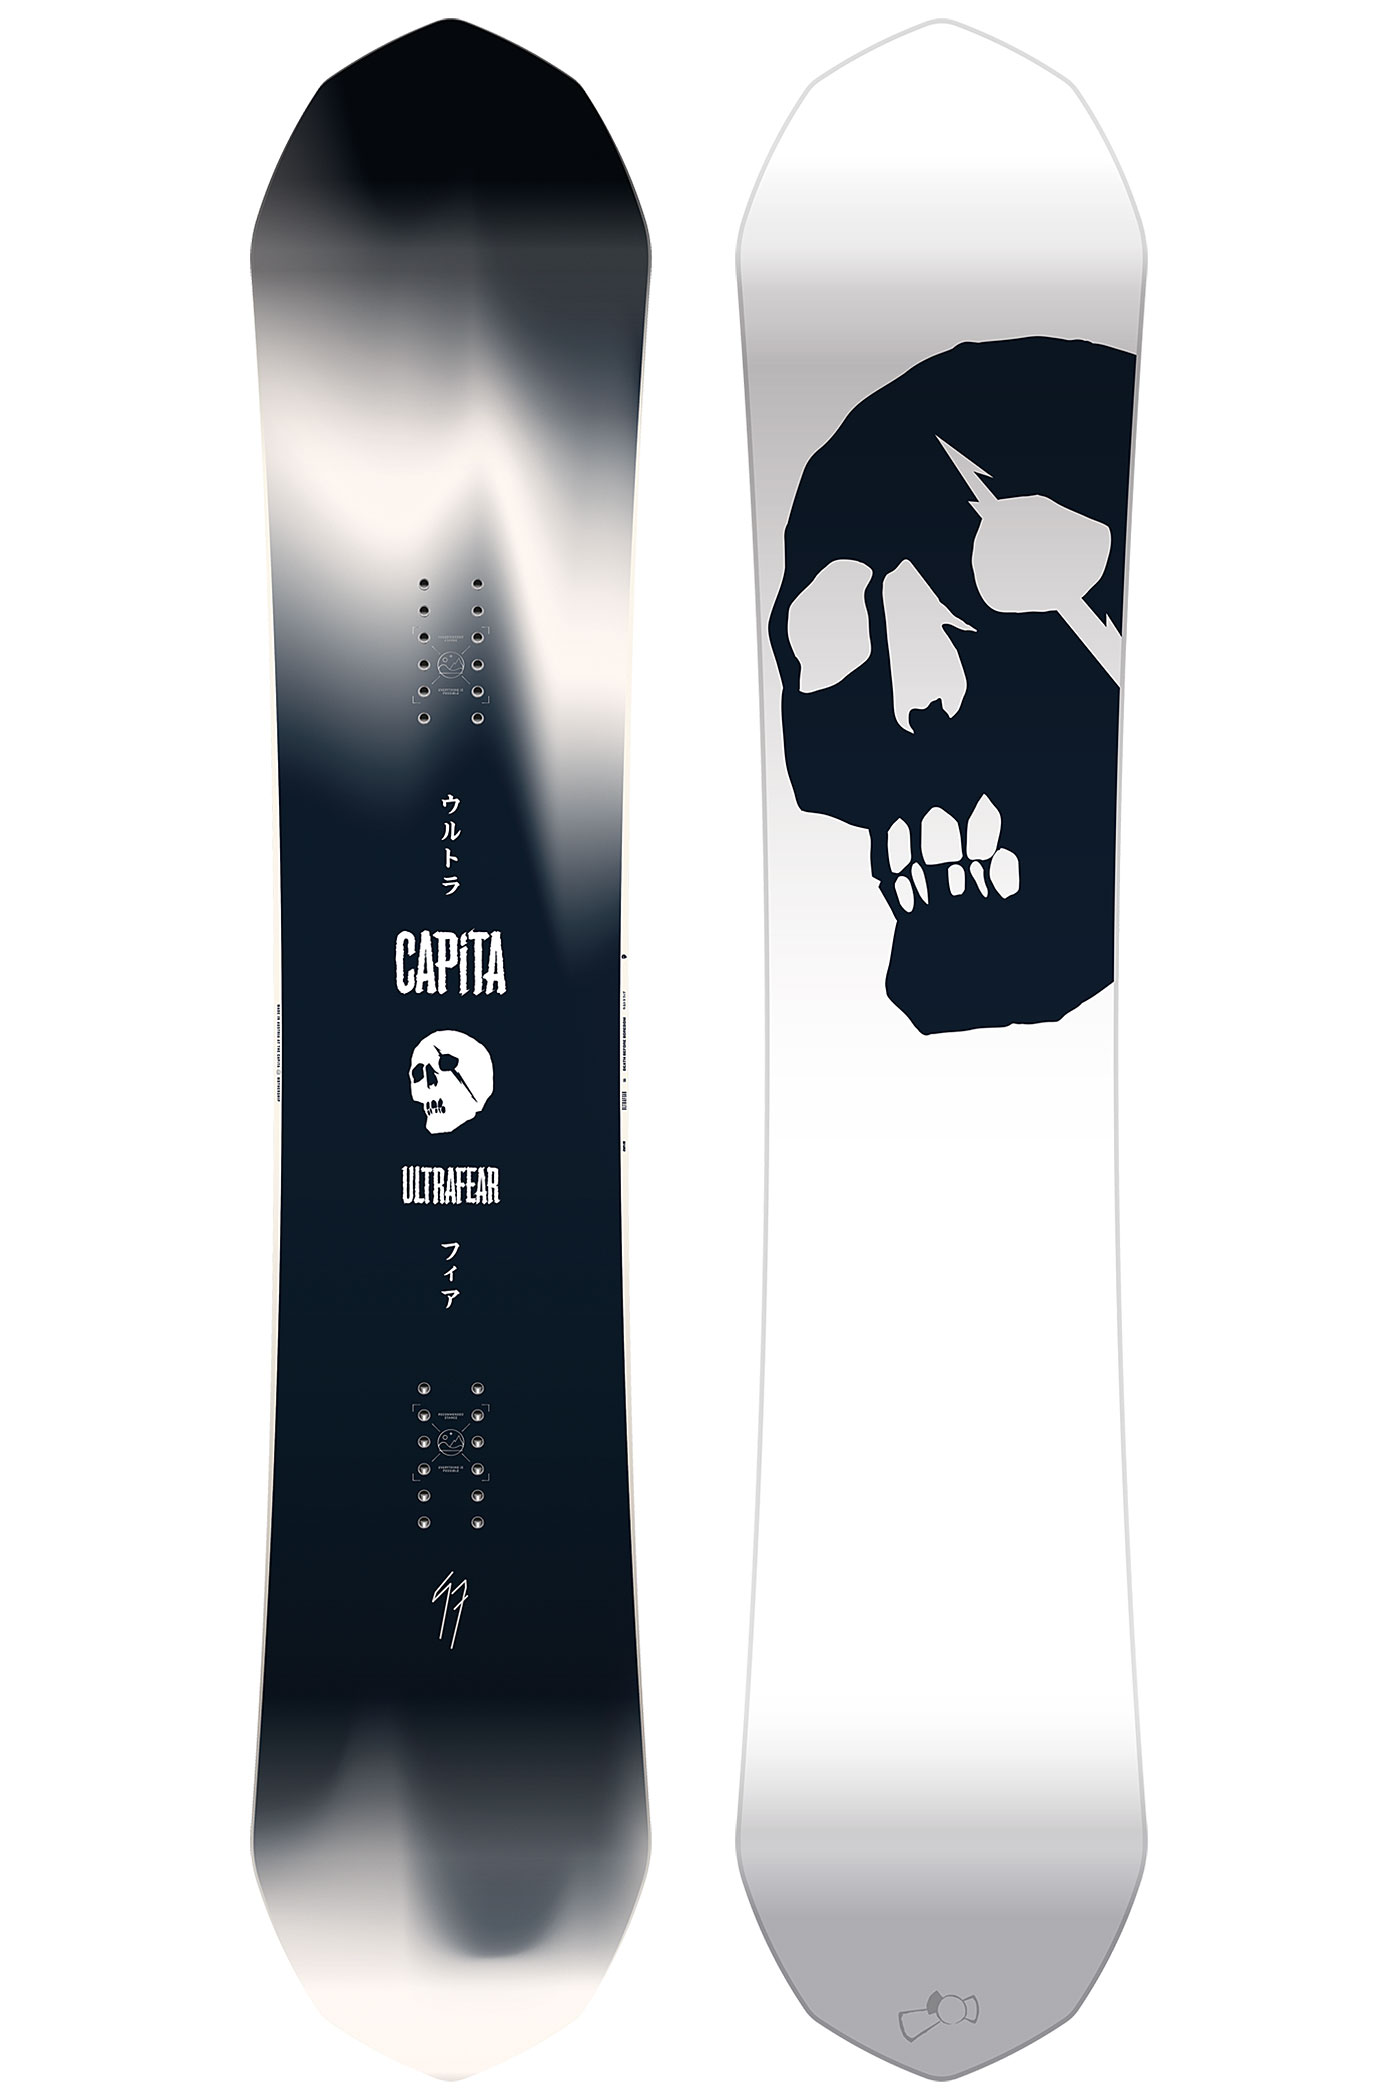 Capita Ultrafear 157cm Snowboard 2016/17 buy at skatedeluxe